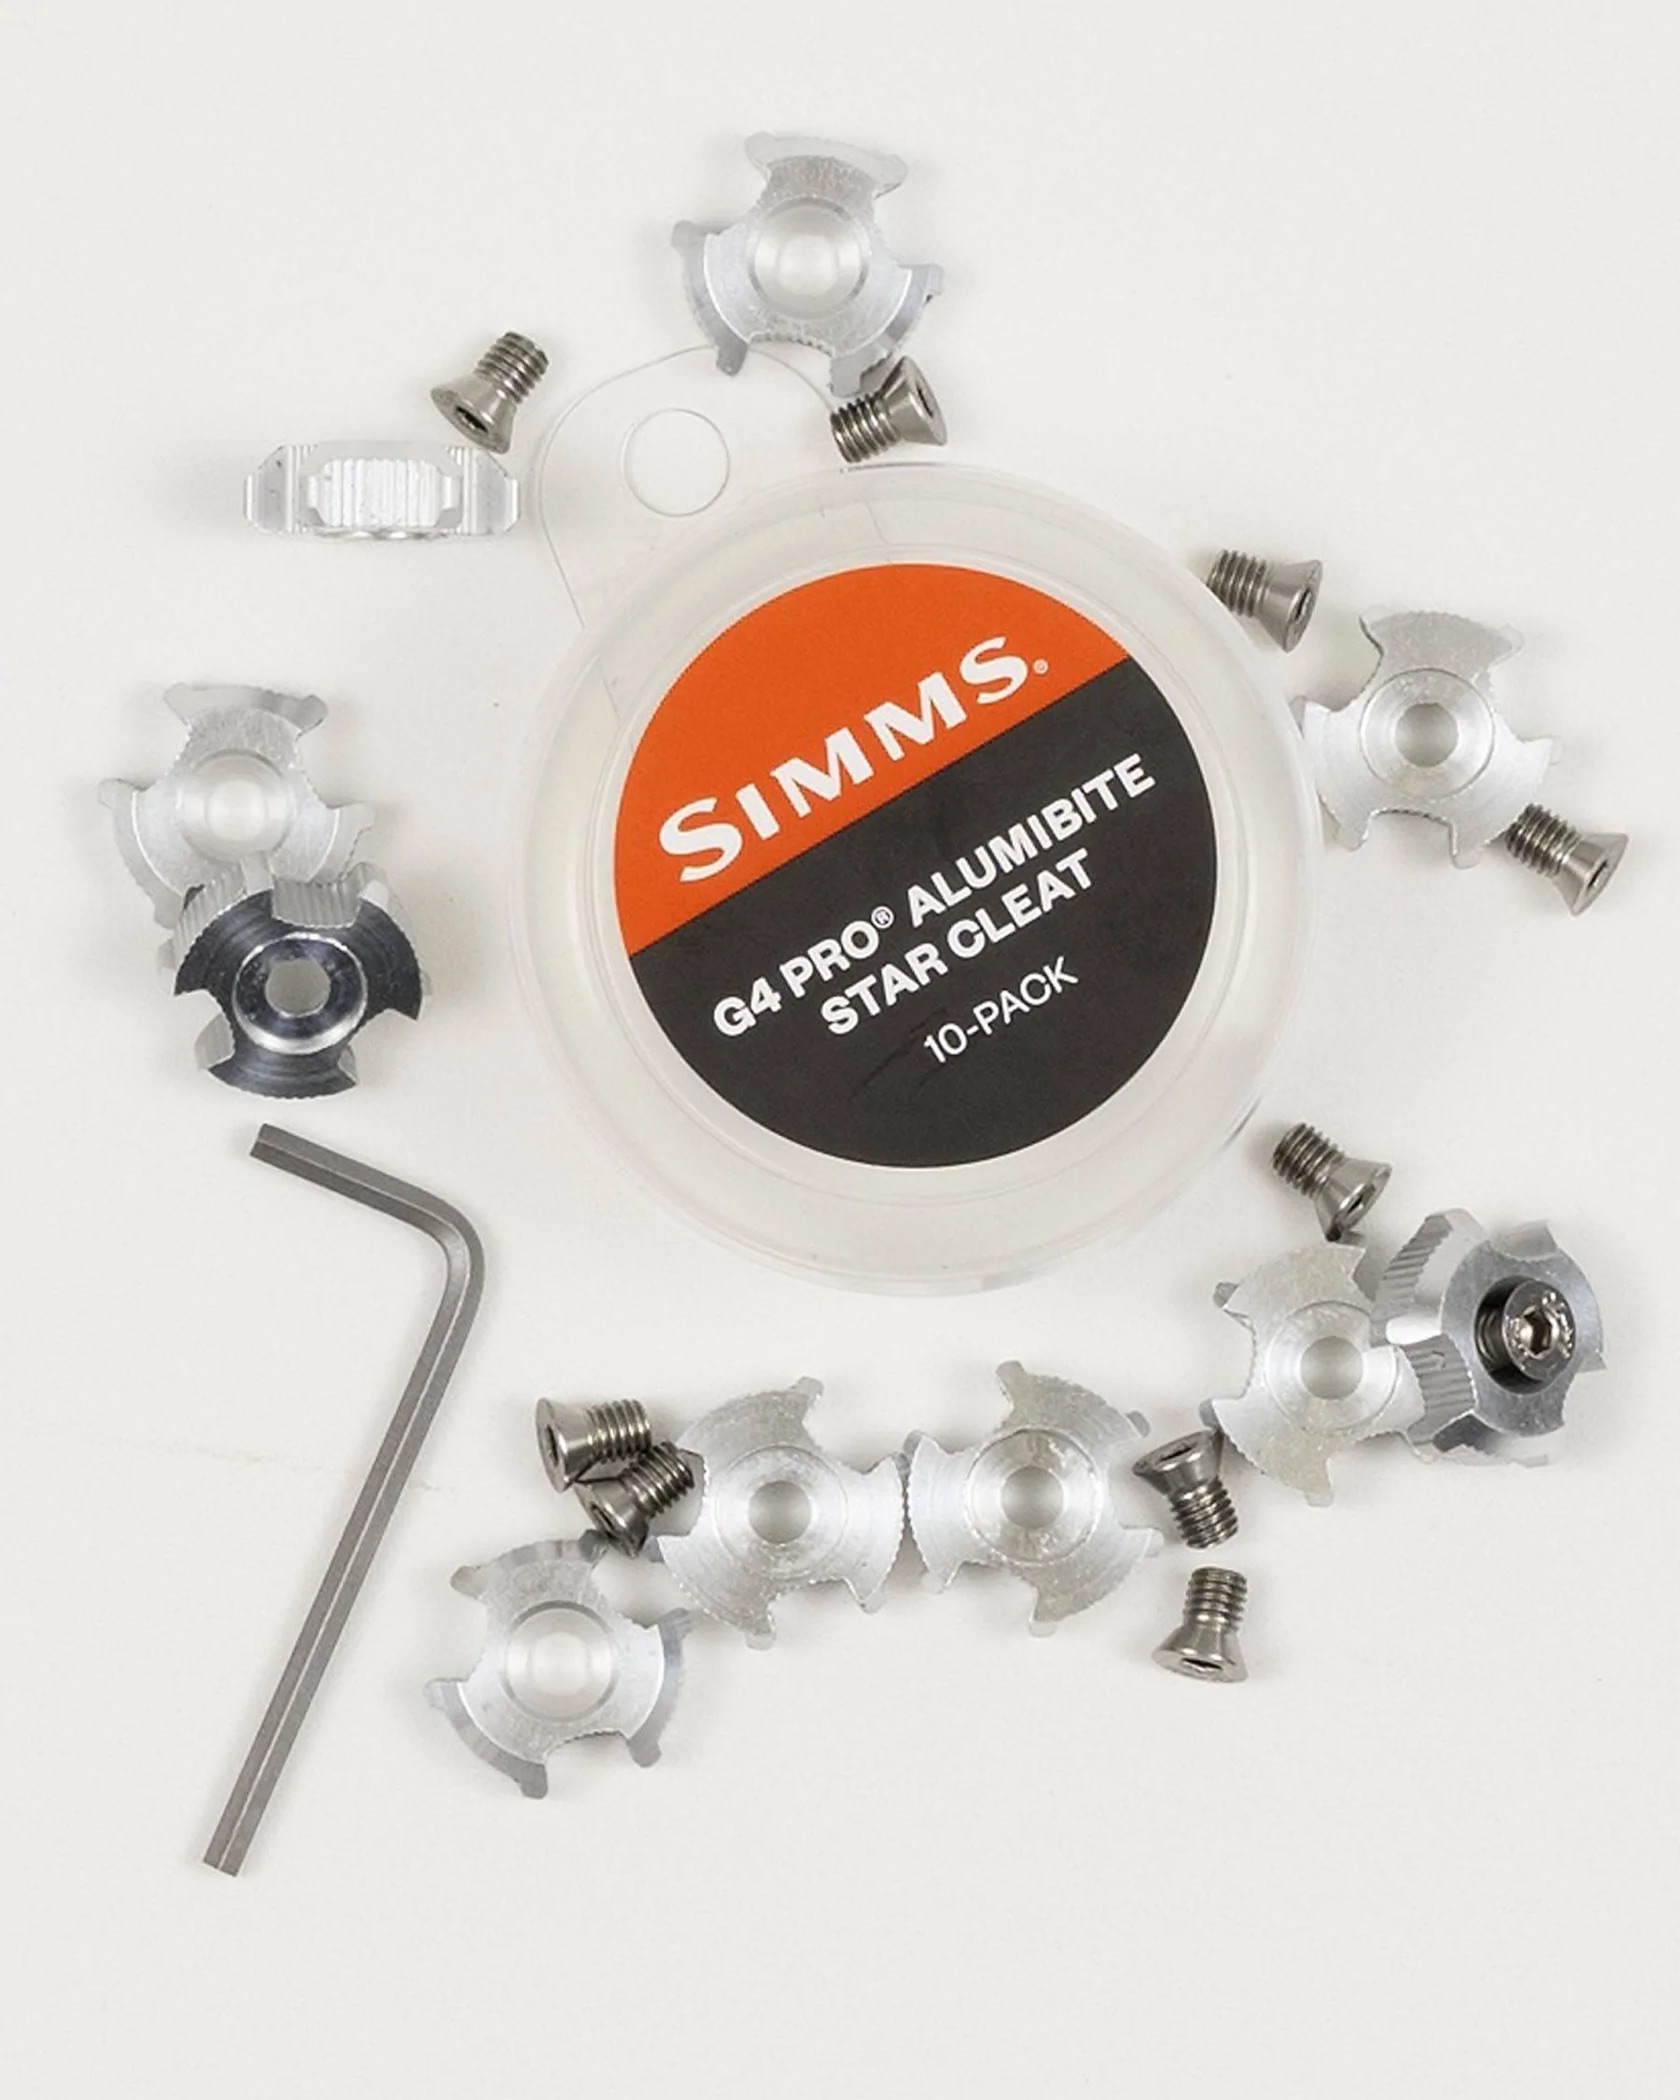 Simms G4 Pro Alumibite Cleats (10-pack)